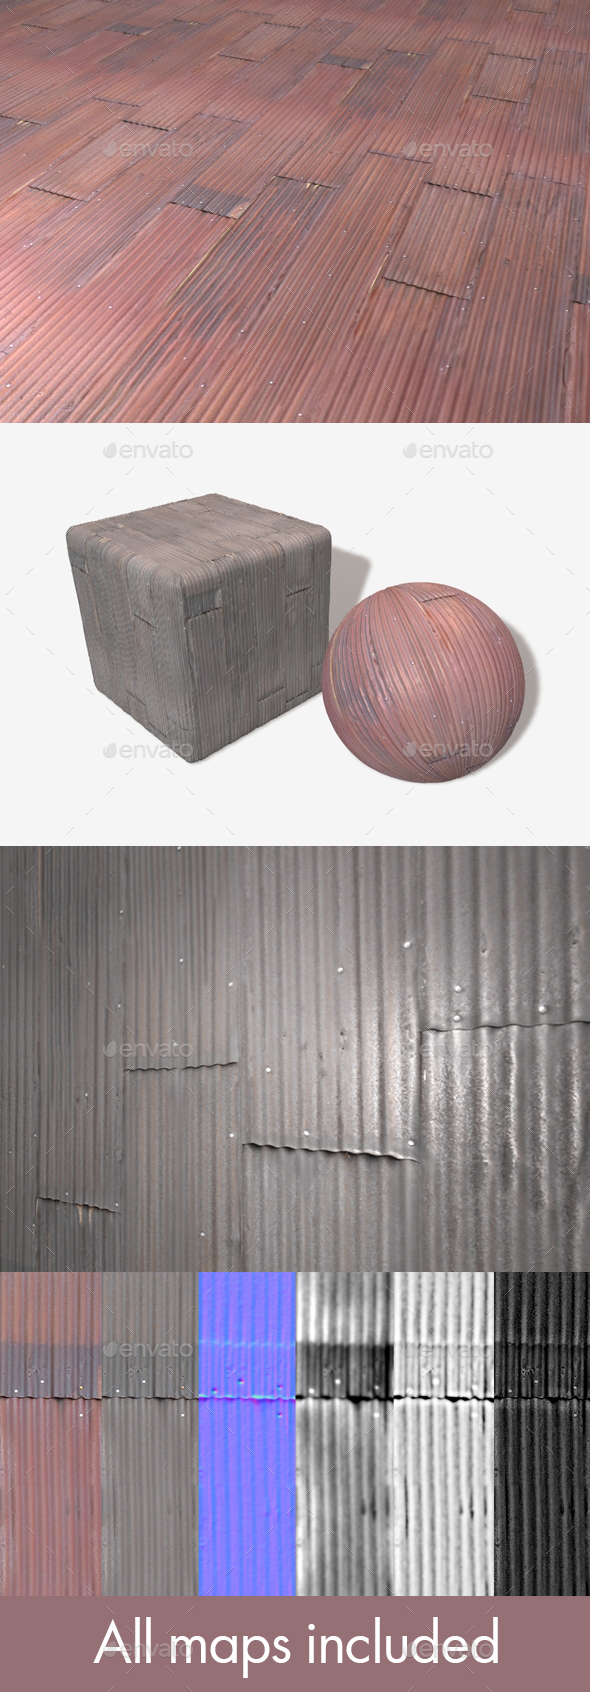 2 Rusty Corrugated - 3Docean 16267588